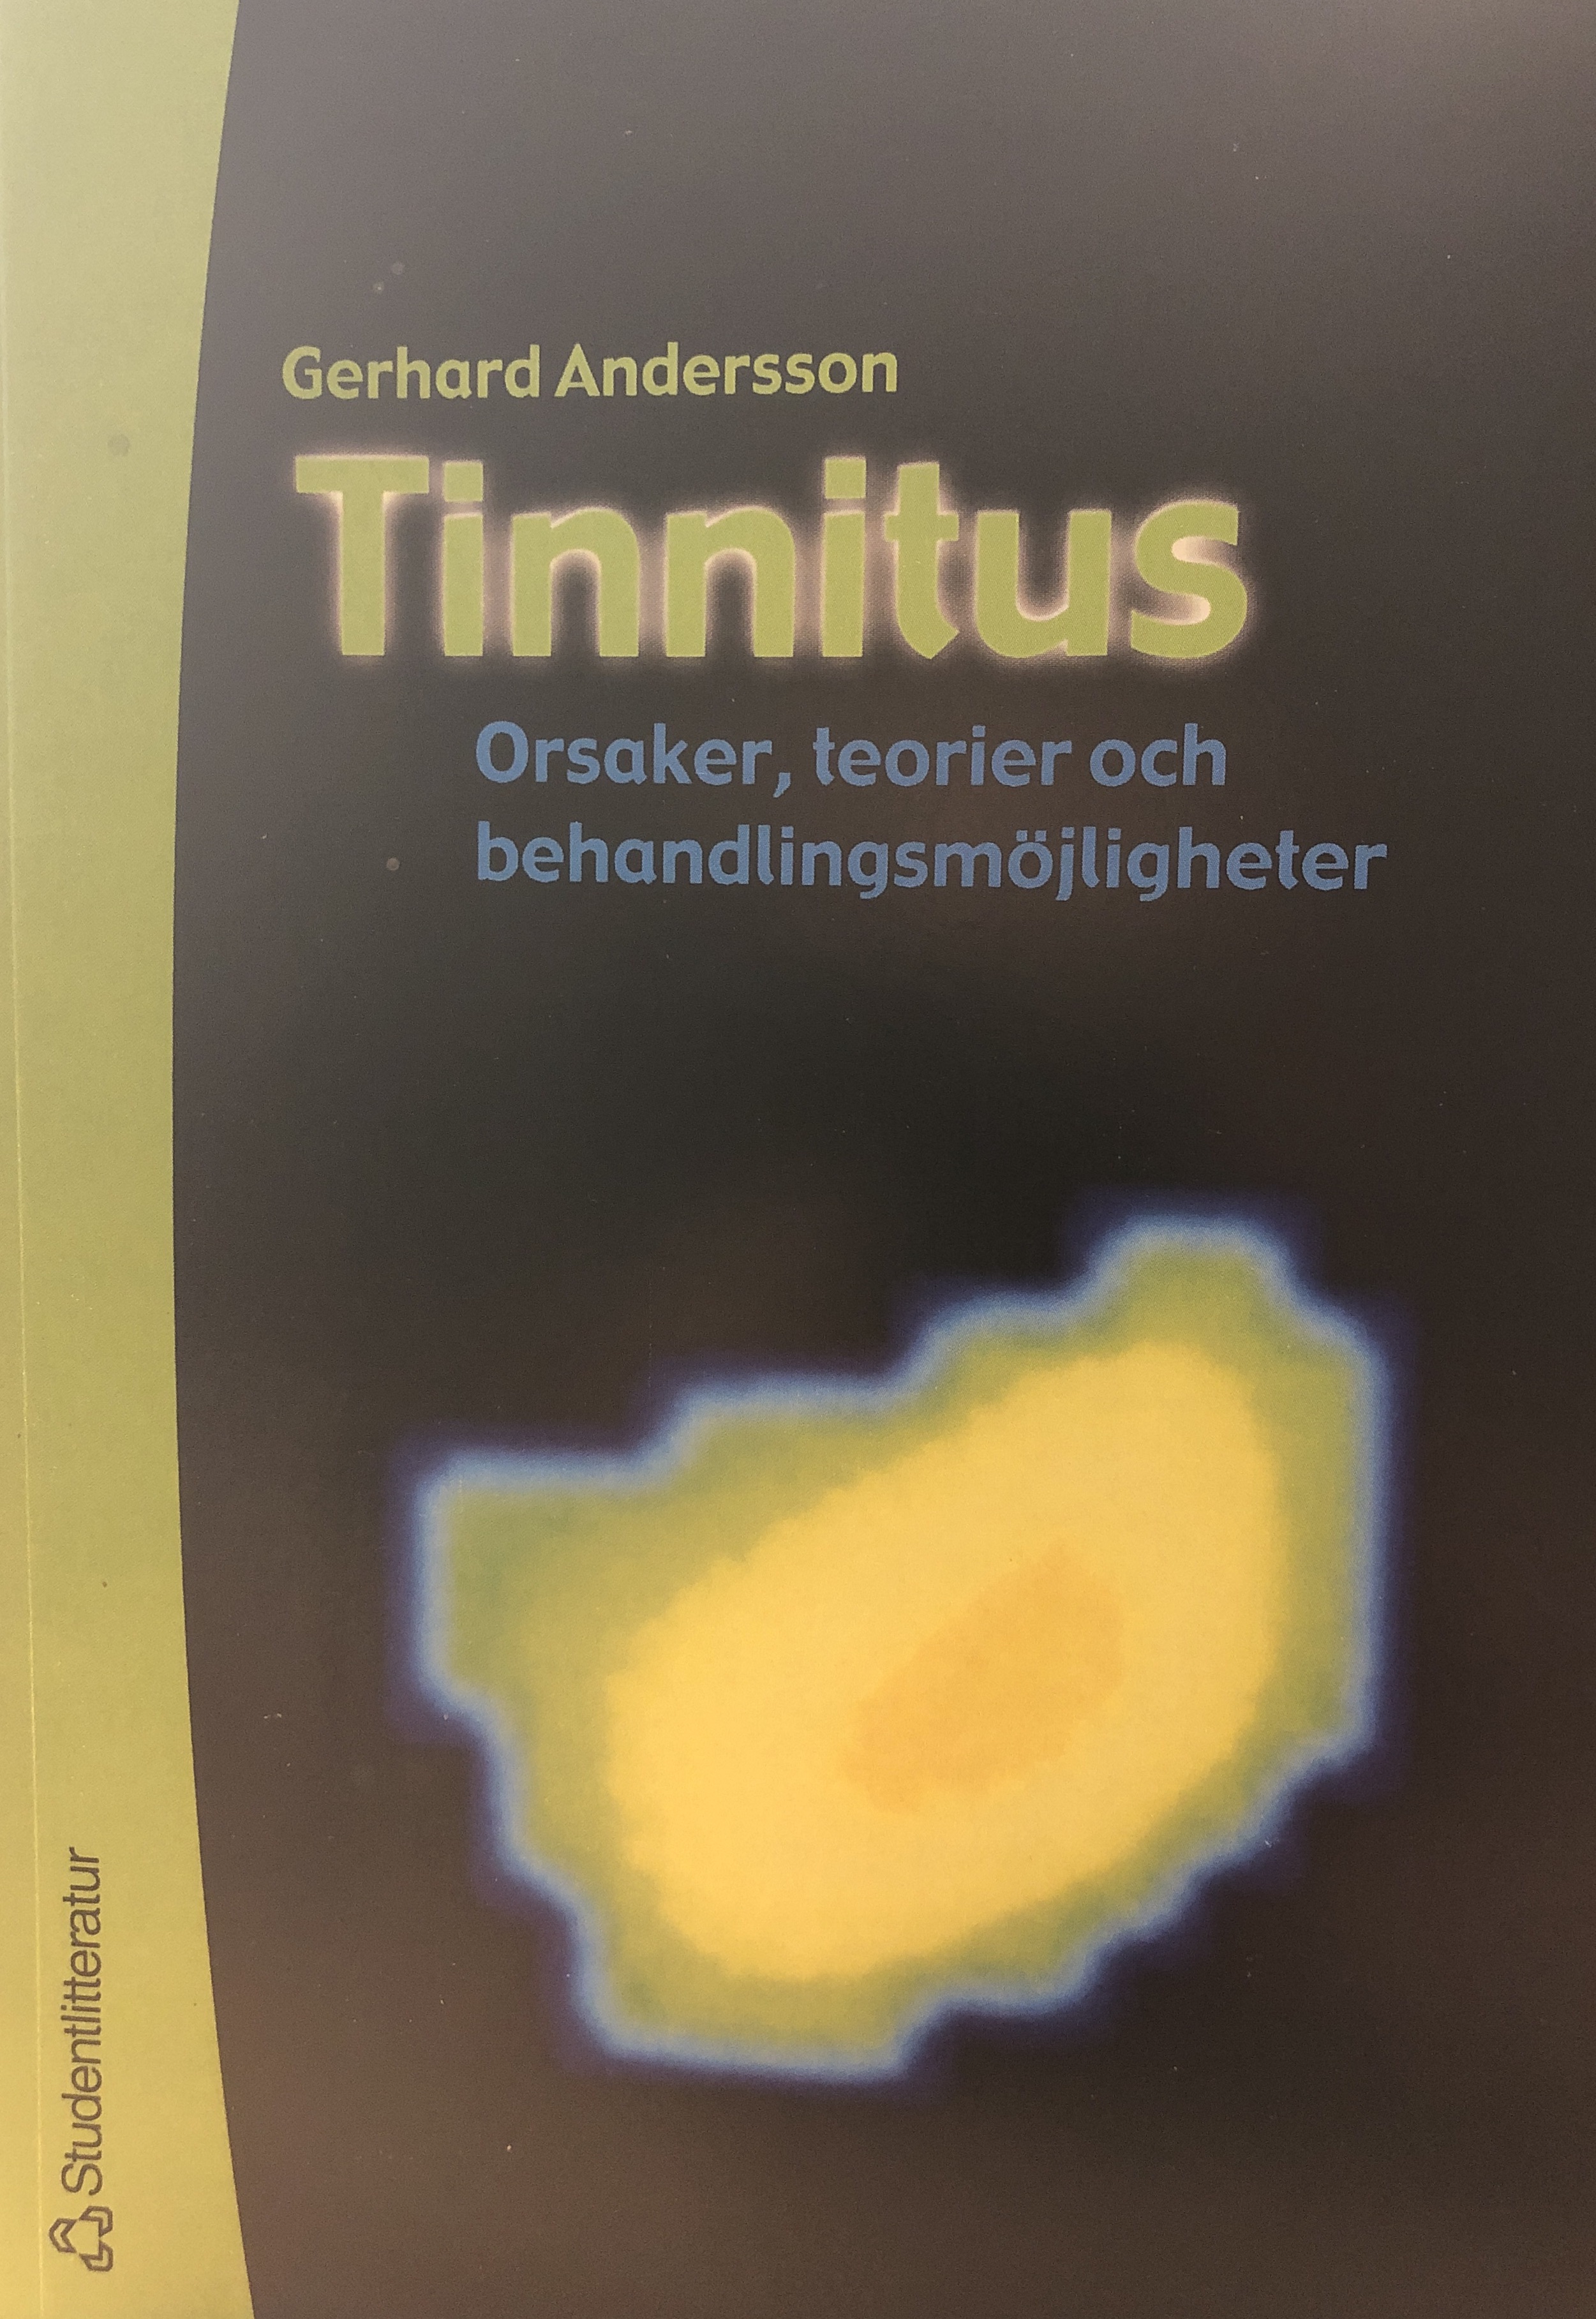 Tinnitus; Gerhard Andersson; 2000